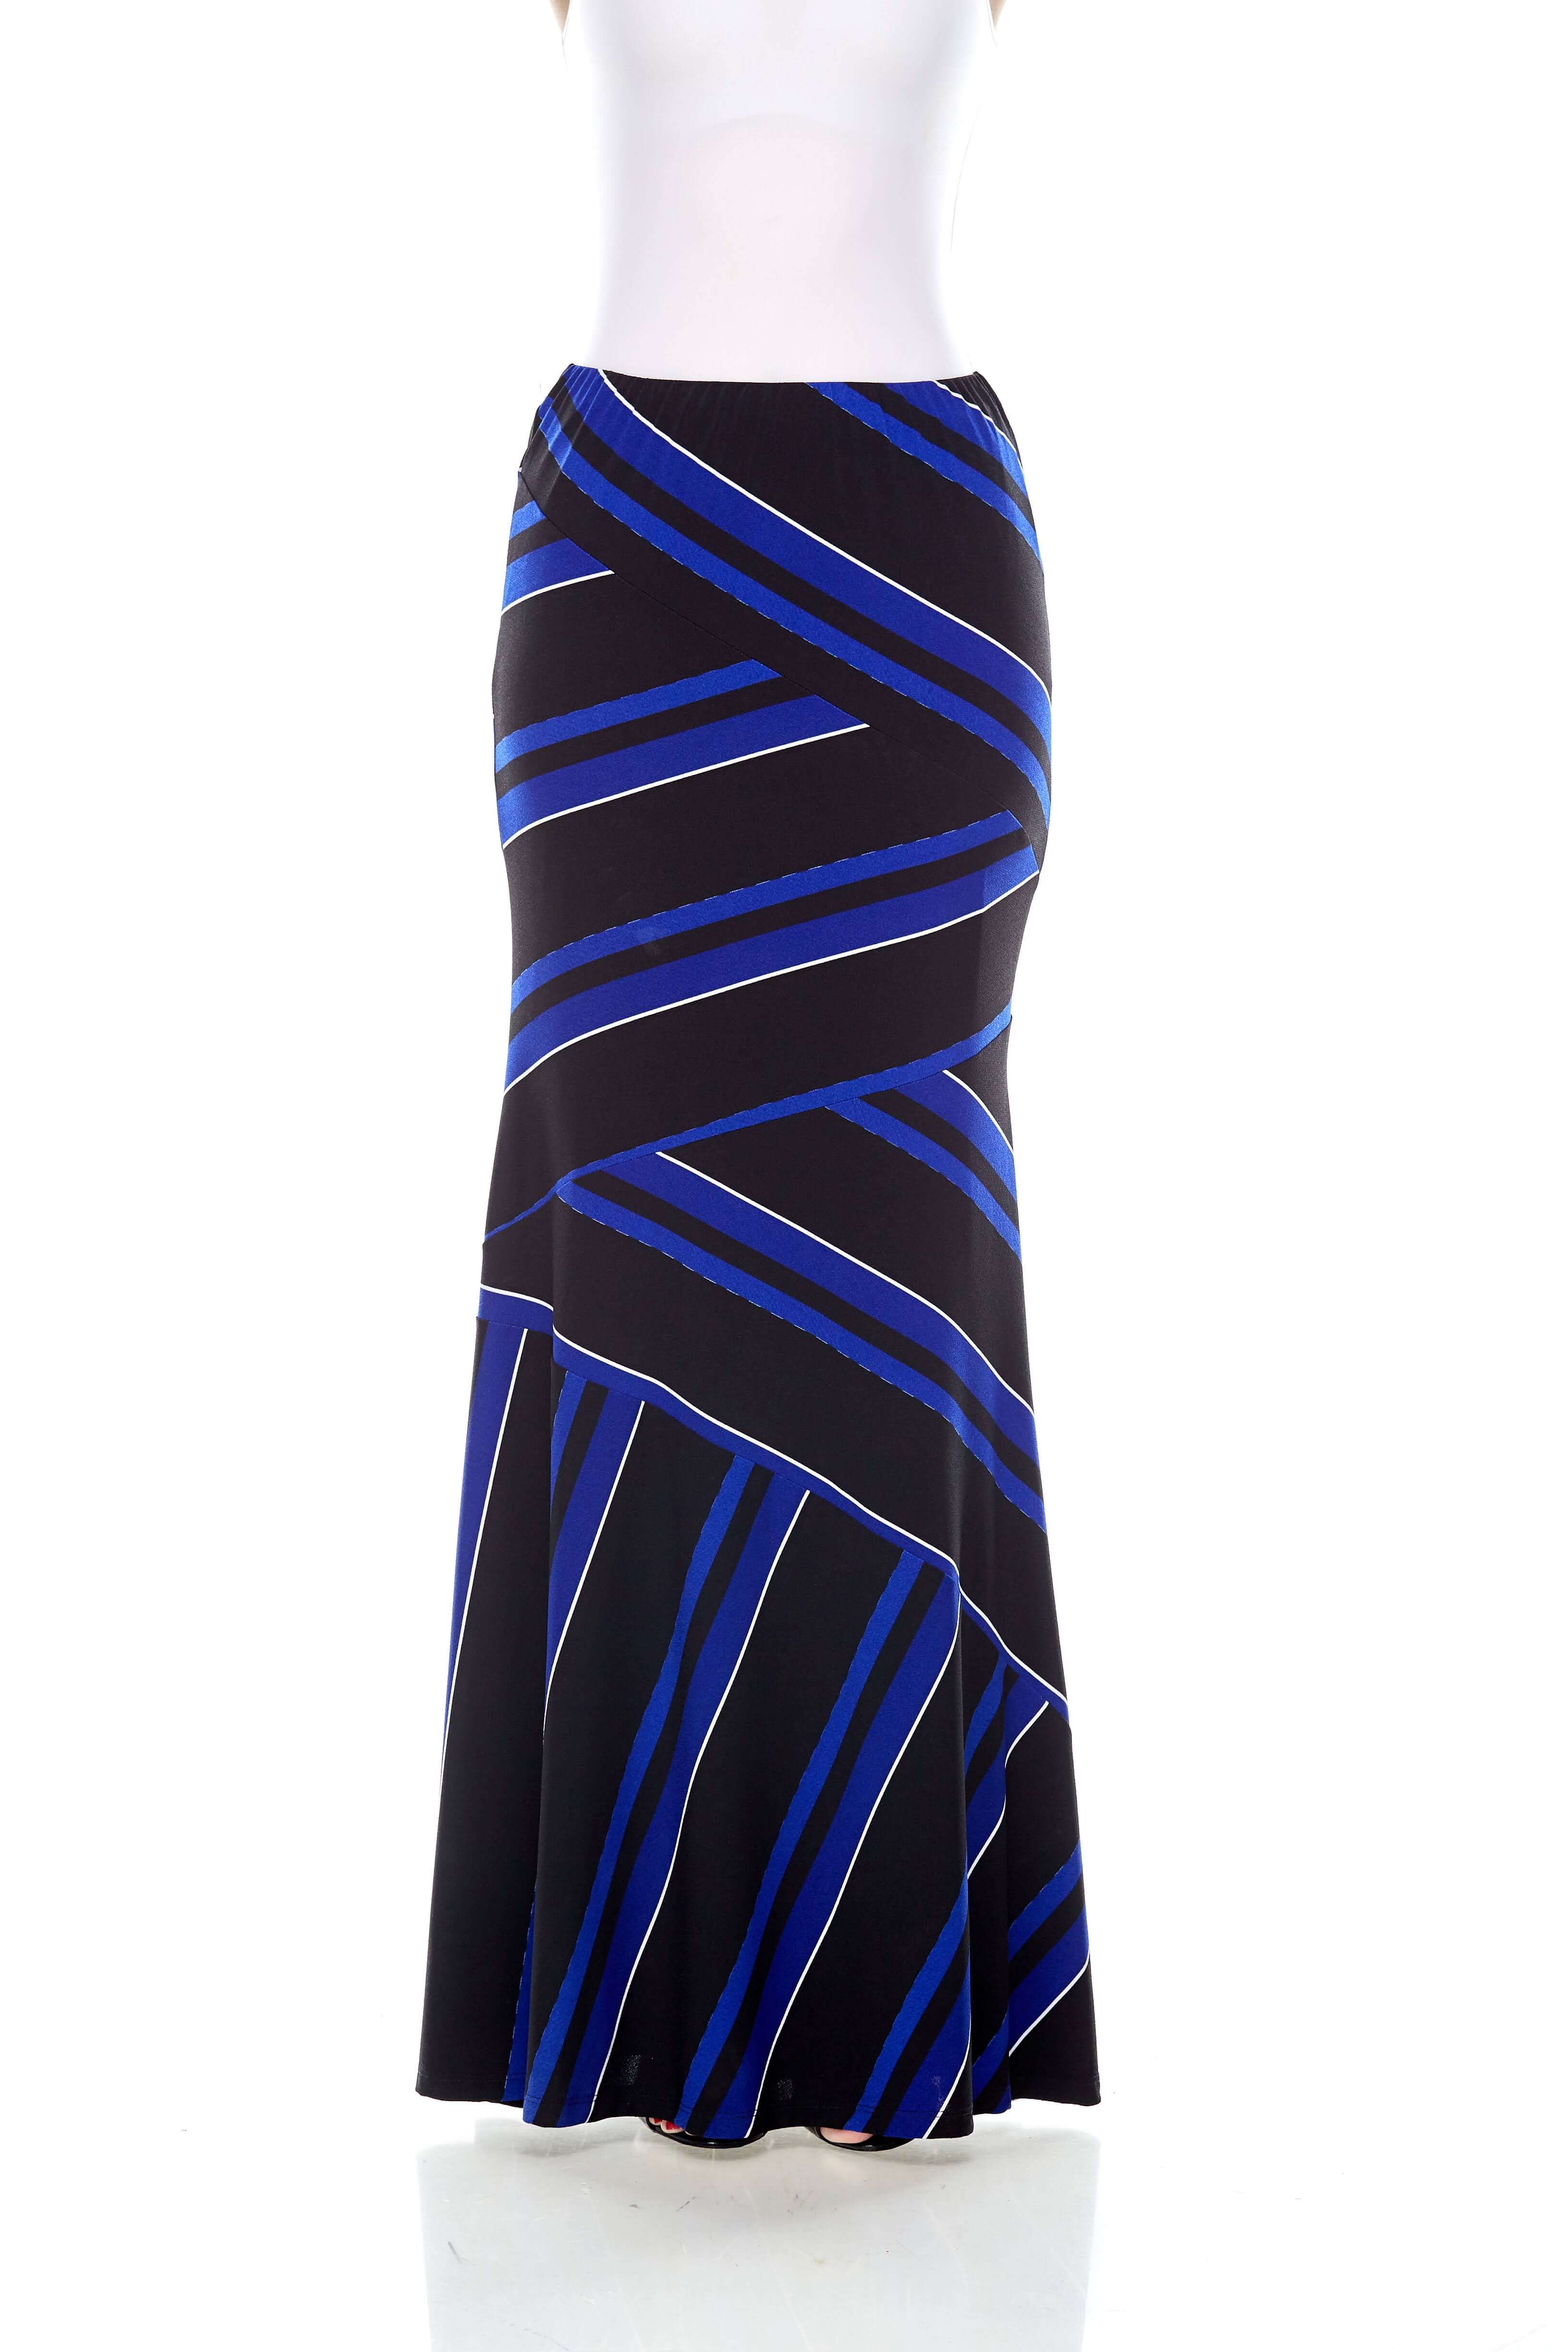 Blue-Black Striped Mermaid Skirt (3)